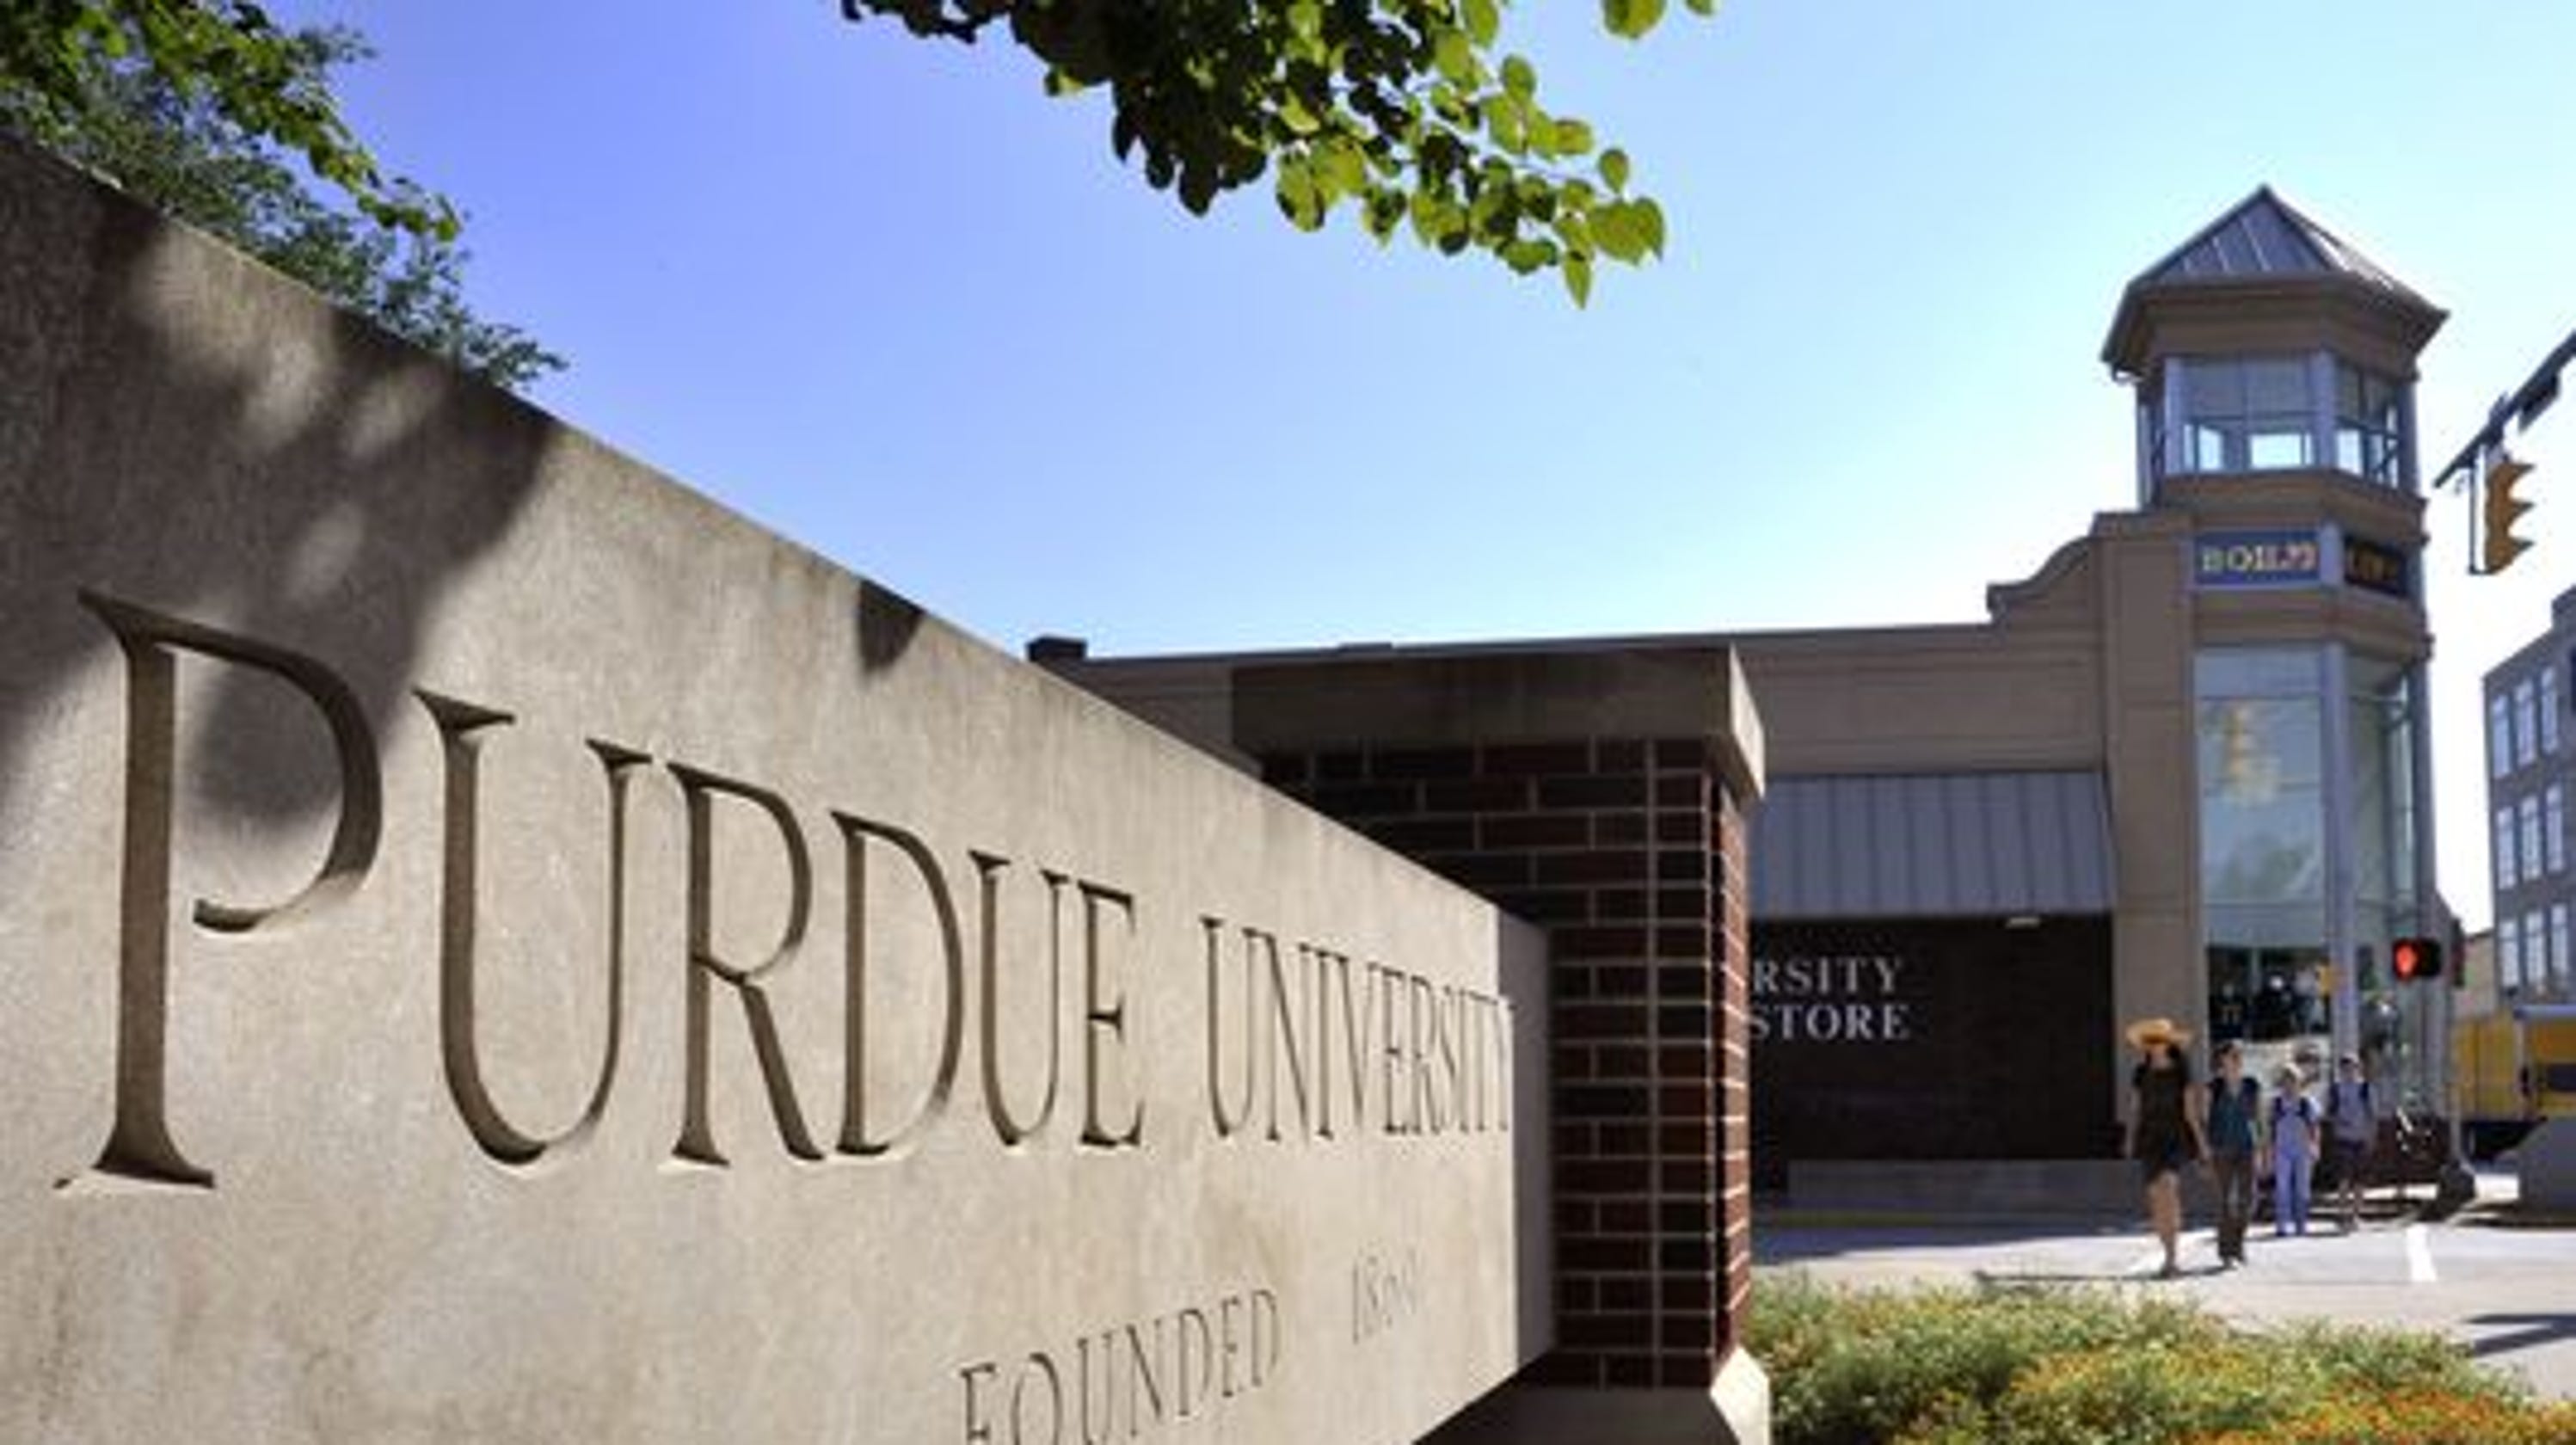 Purdue University Answers 5 Questions - MetroMBA